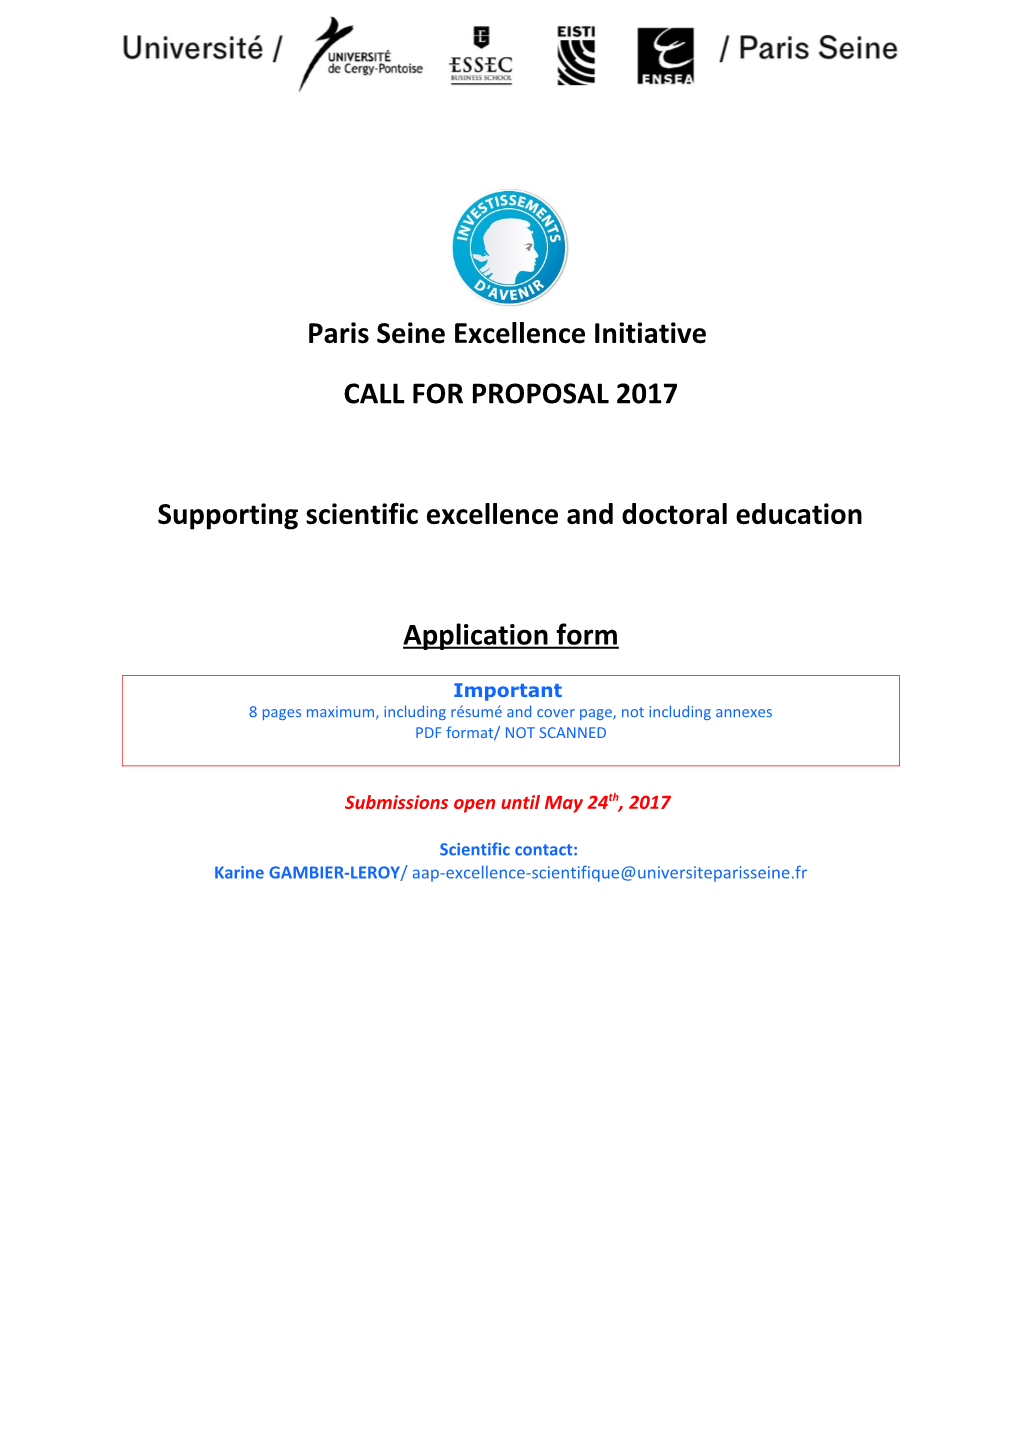 Paris Seine Excellence Initiative